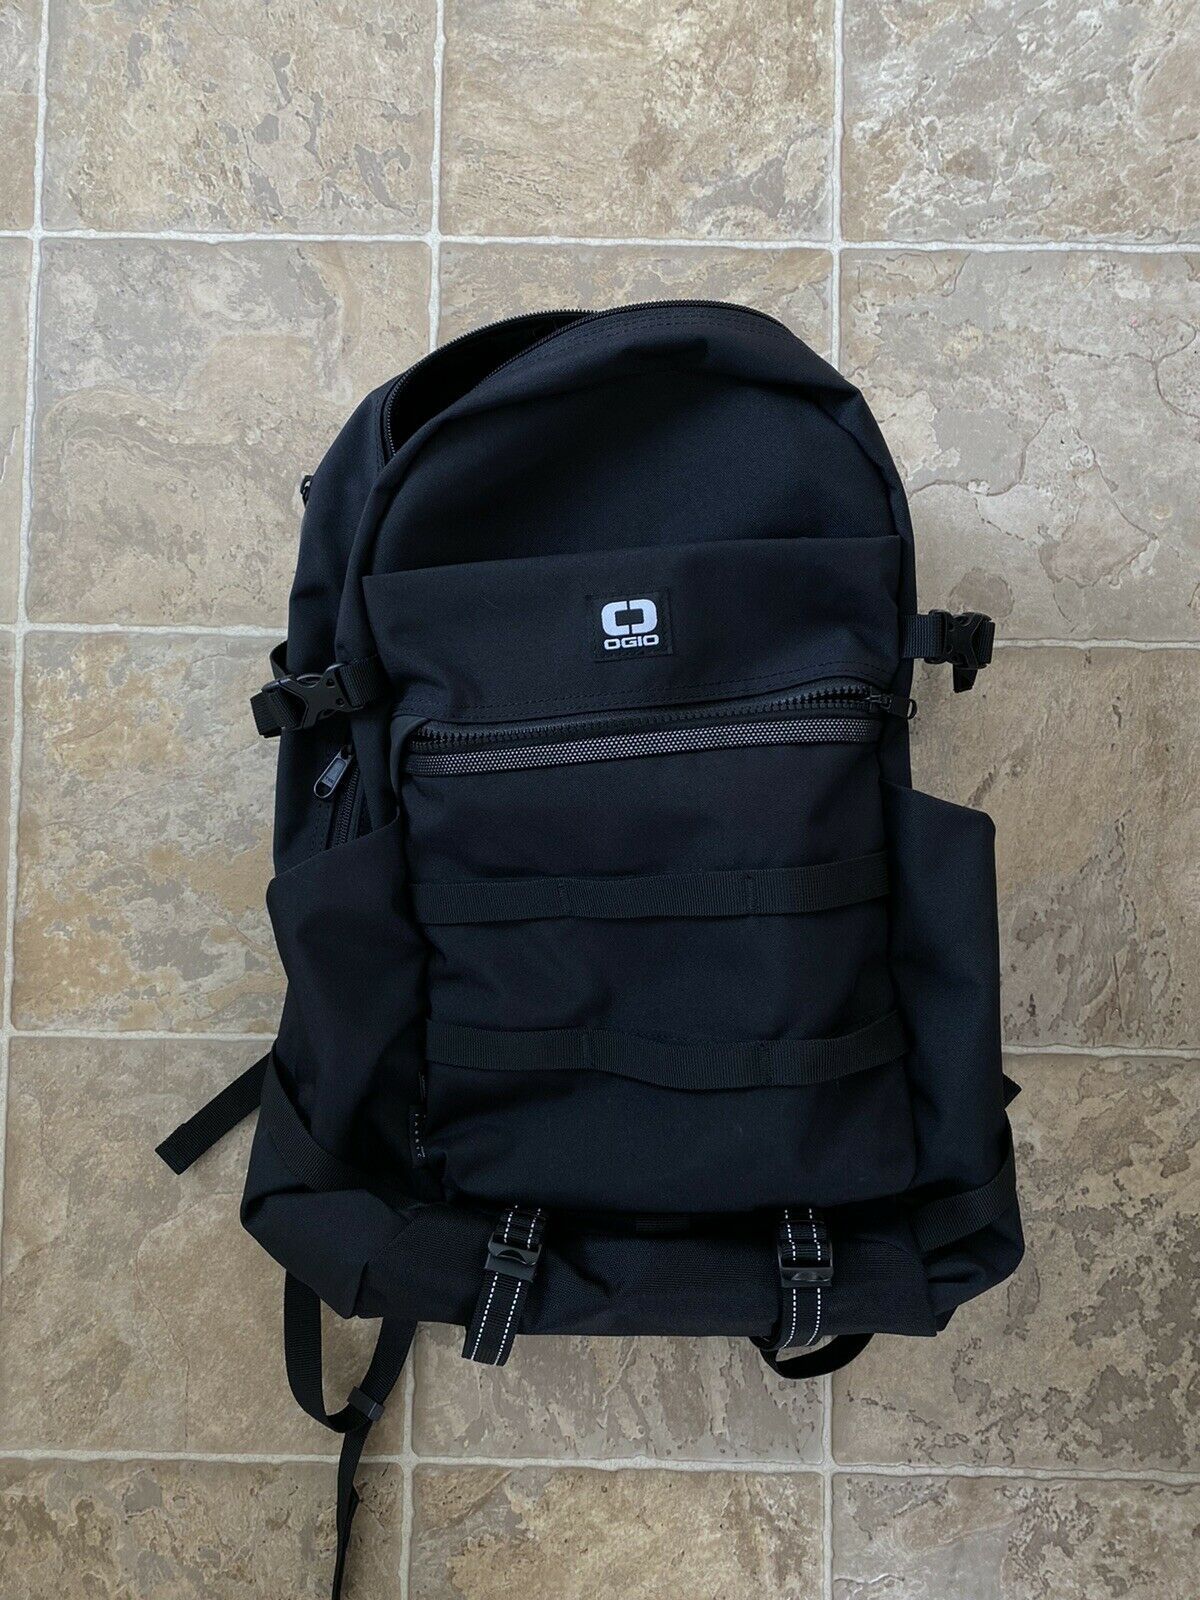 Ogio convoy 320 laptop backpack